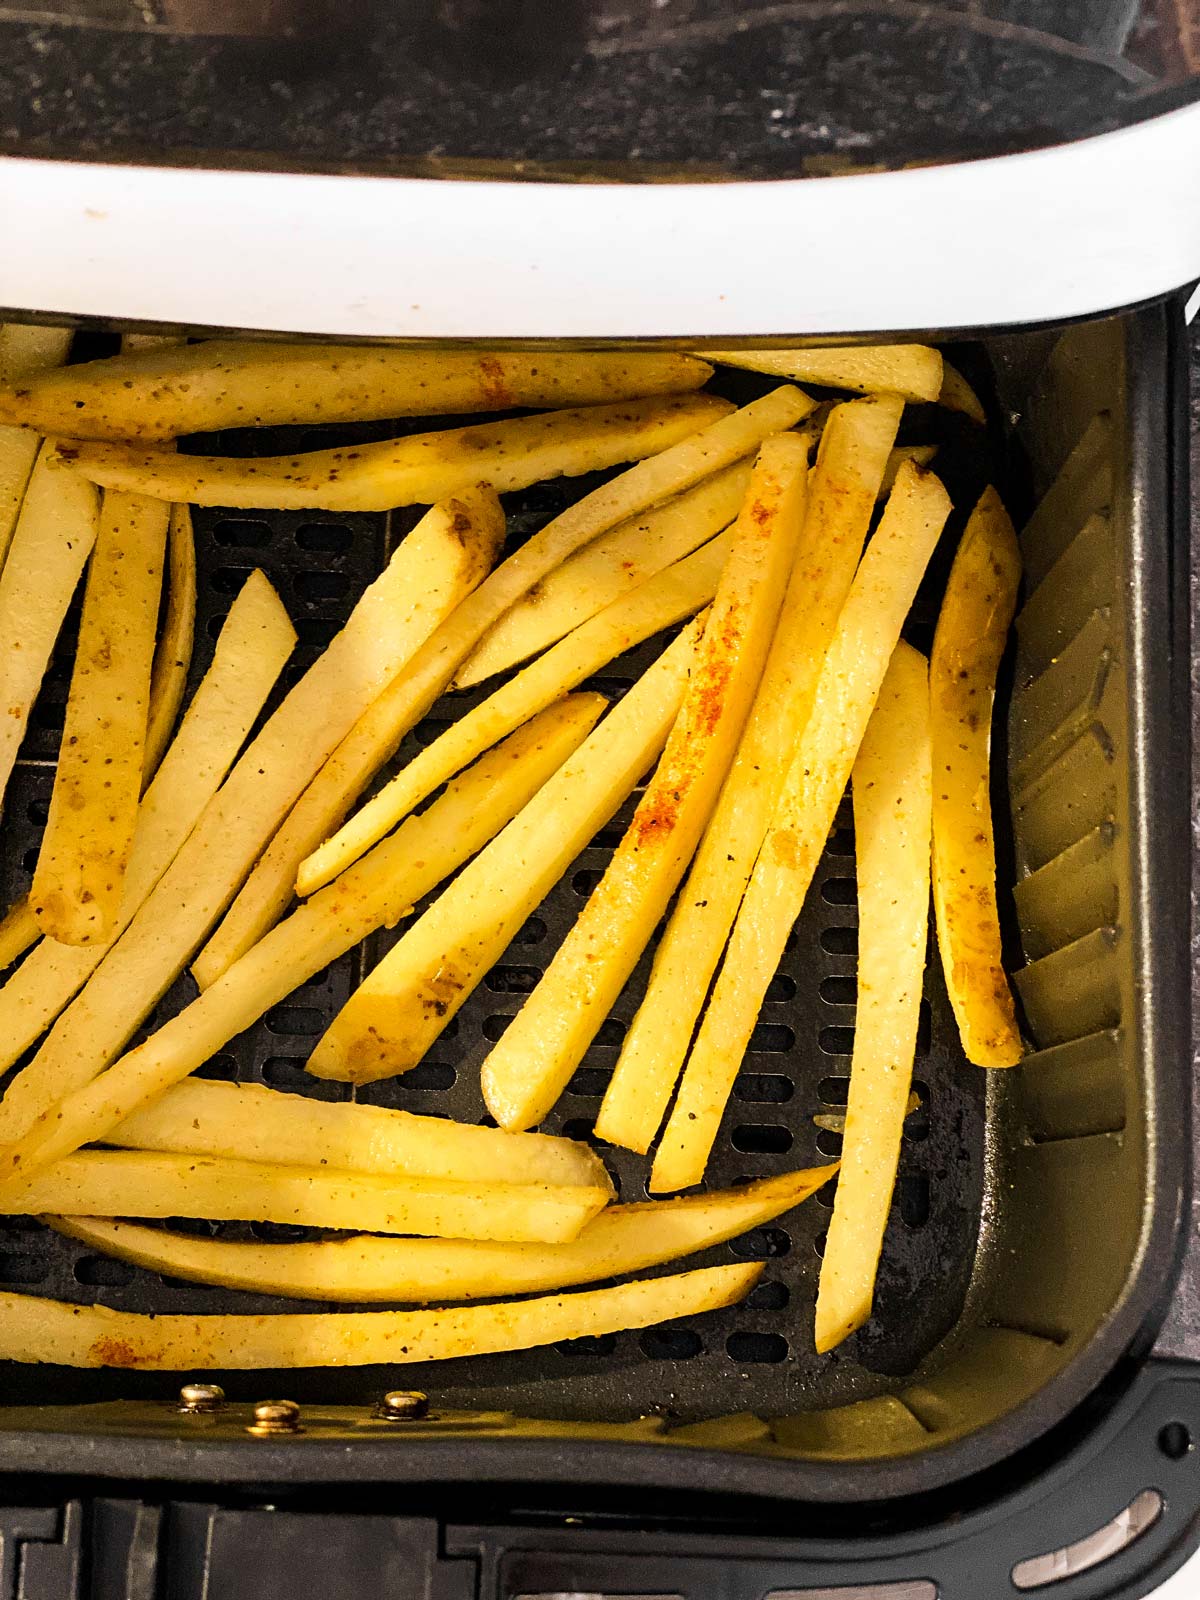 uncooked fries in air fryer basket